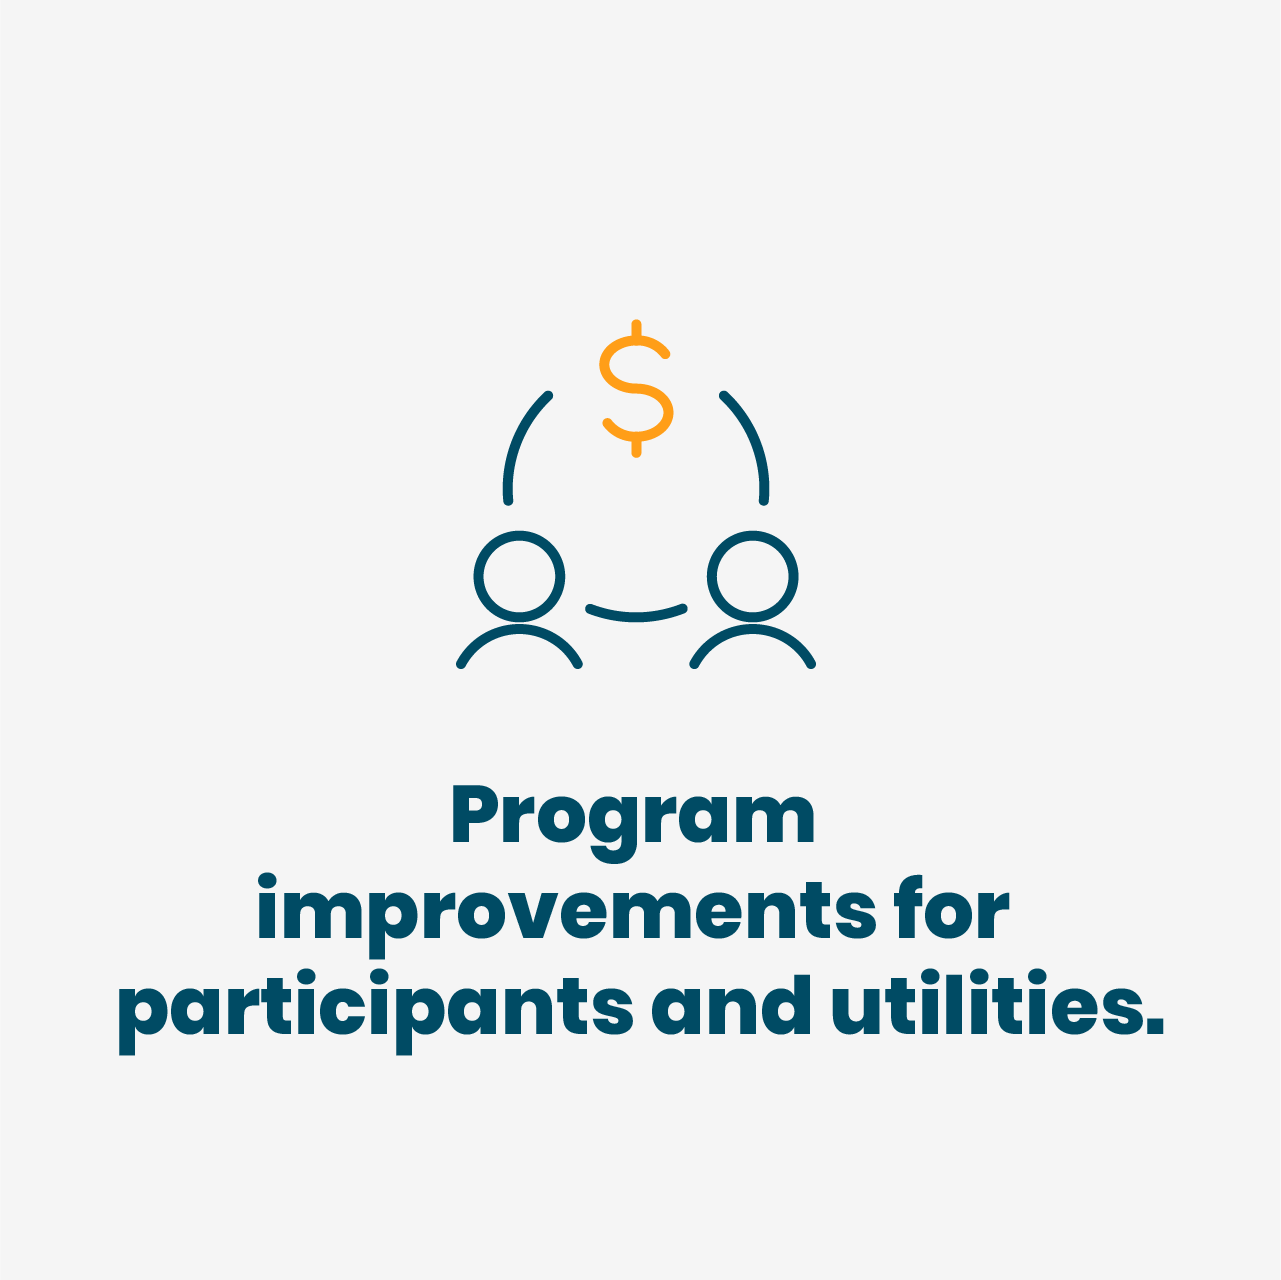 Program improvements for participants and utilities.